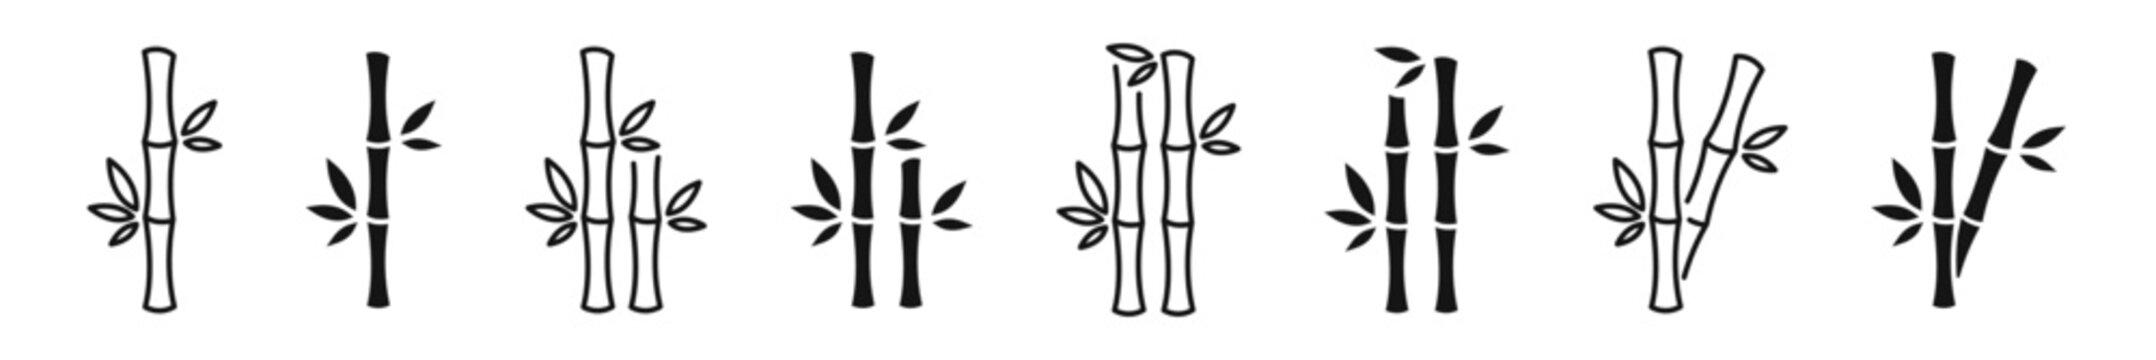 Bamboo vector icon set. Bamboo symbols. Bamboo plant silhouettes. EPS 10